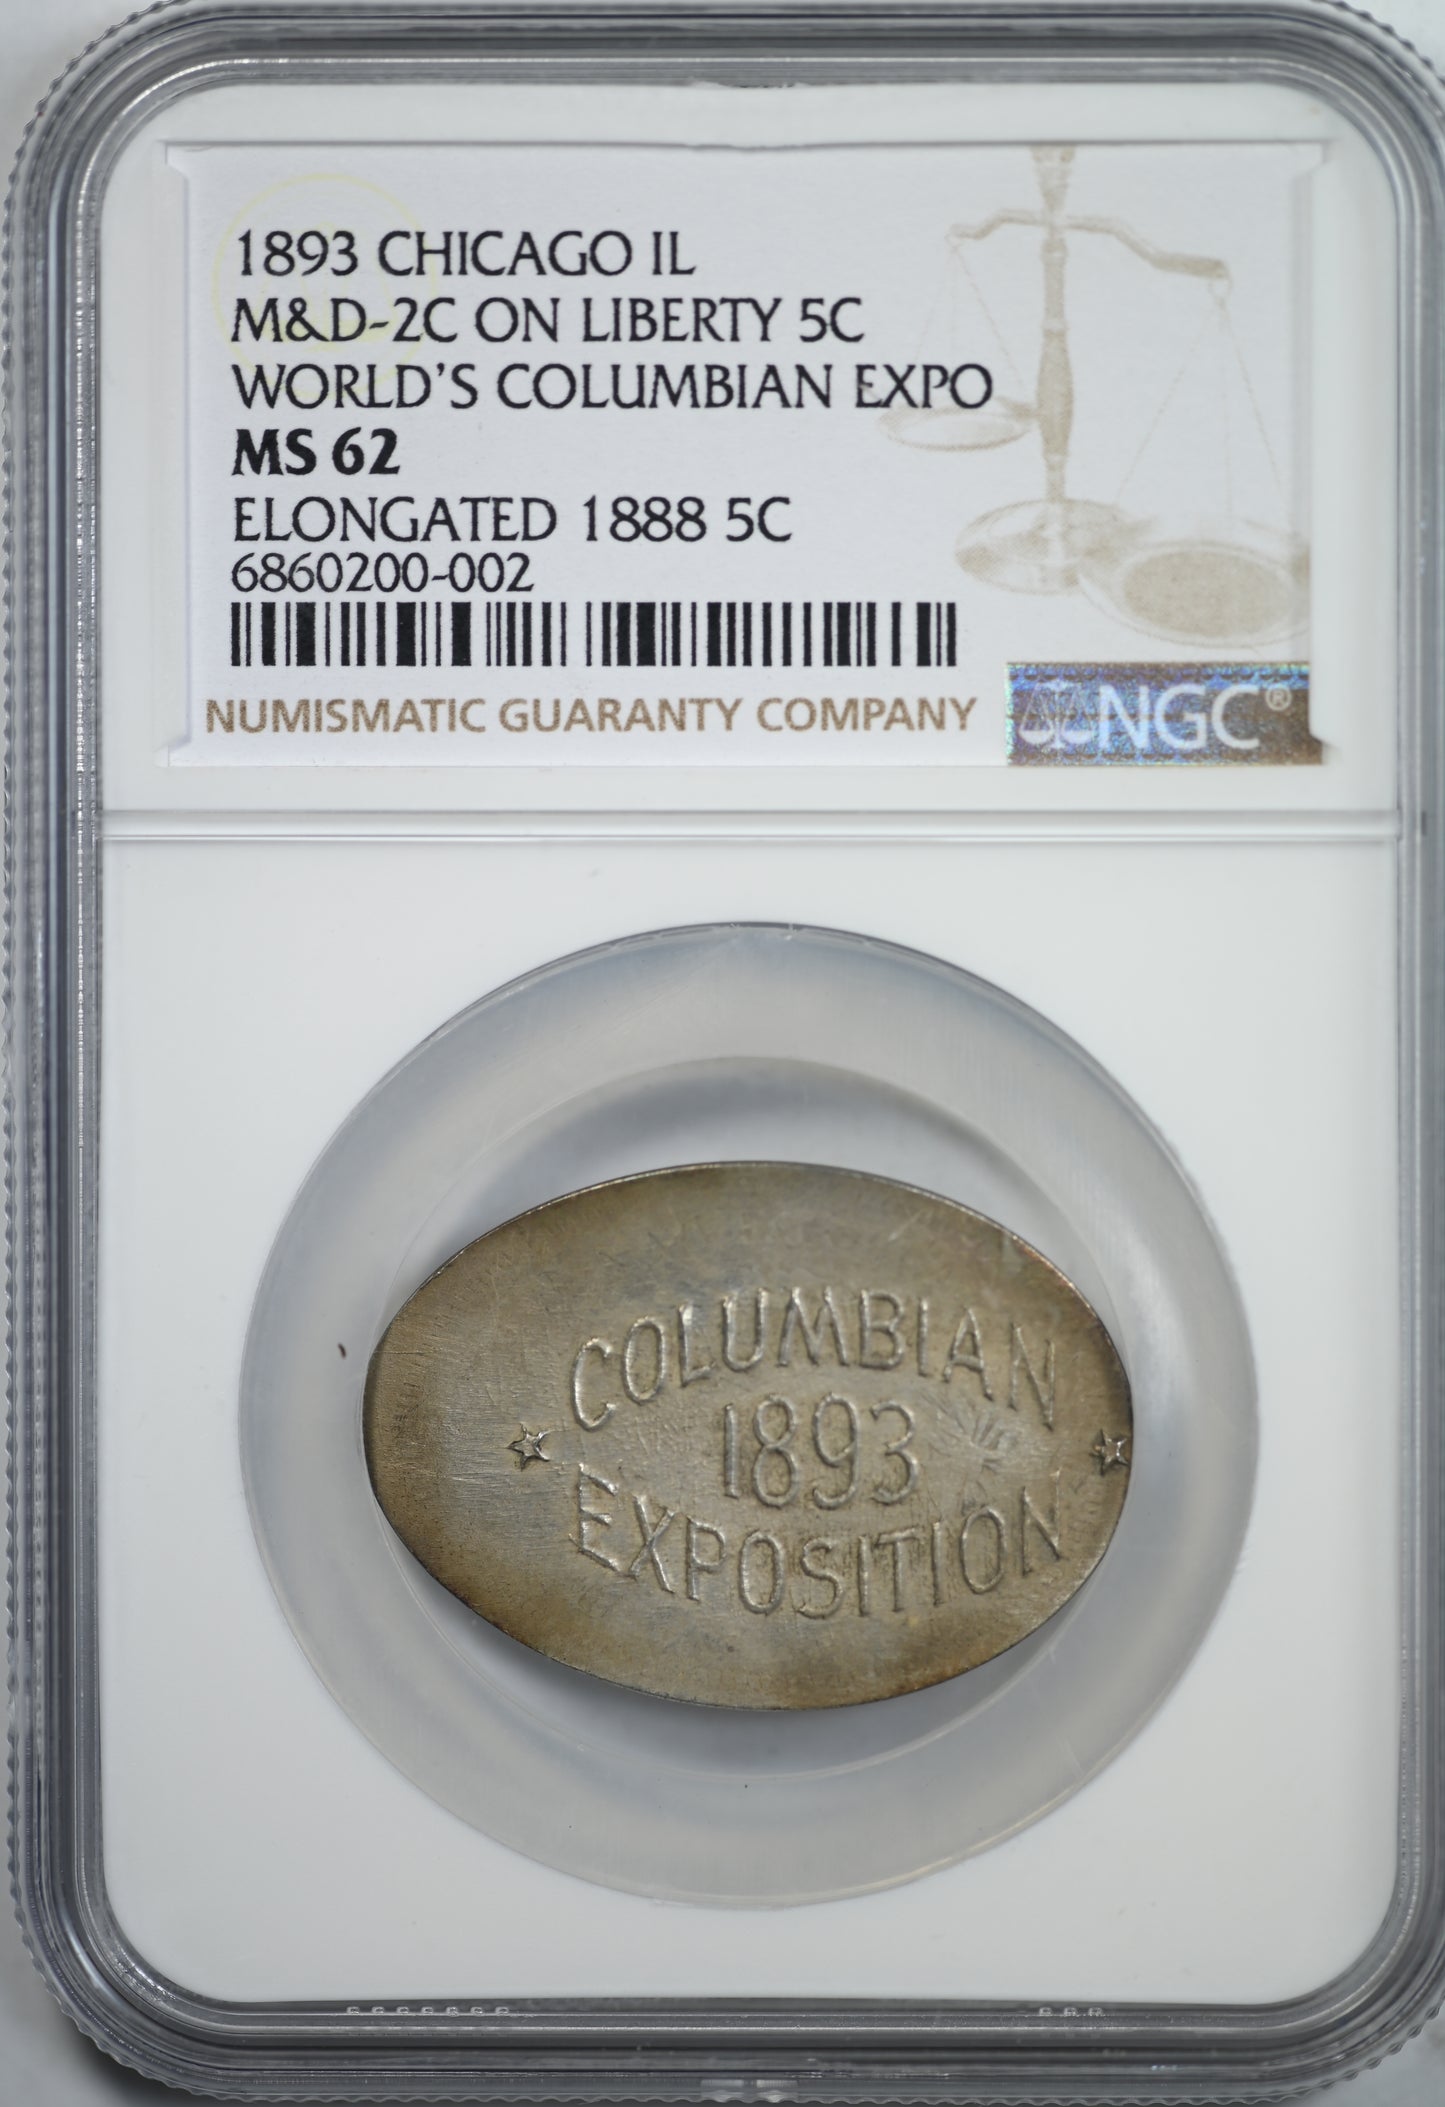 1893 World's Columbian Exposition Elongated Liberty V-Nickel NGC MS62 - M&D-2C on 1888 Liberty 5C Obverse Slab